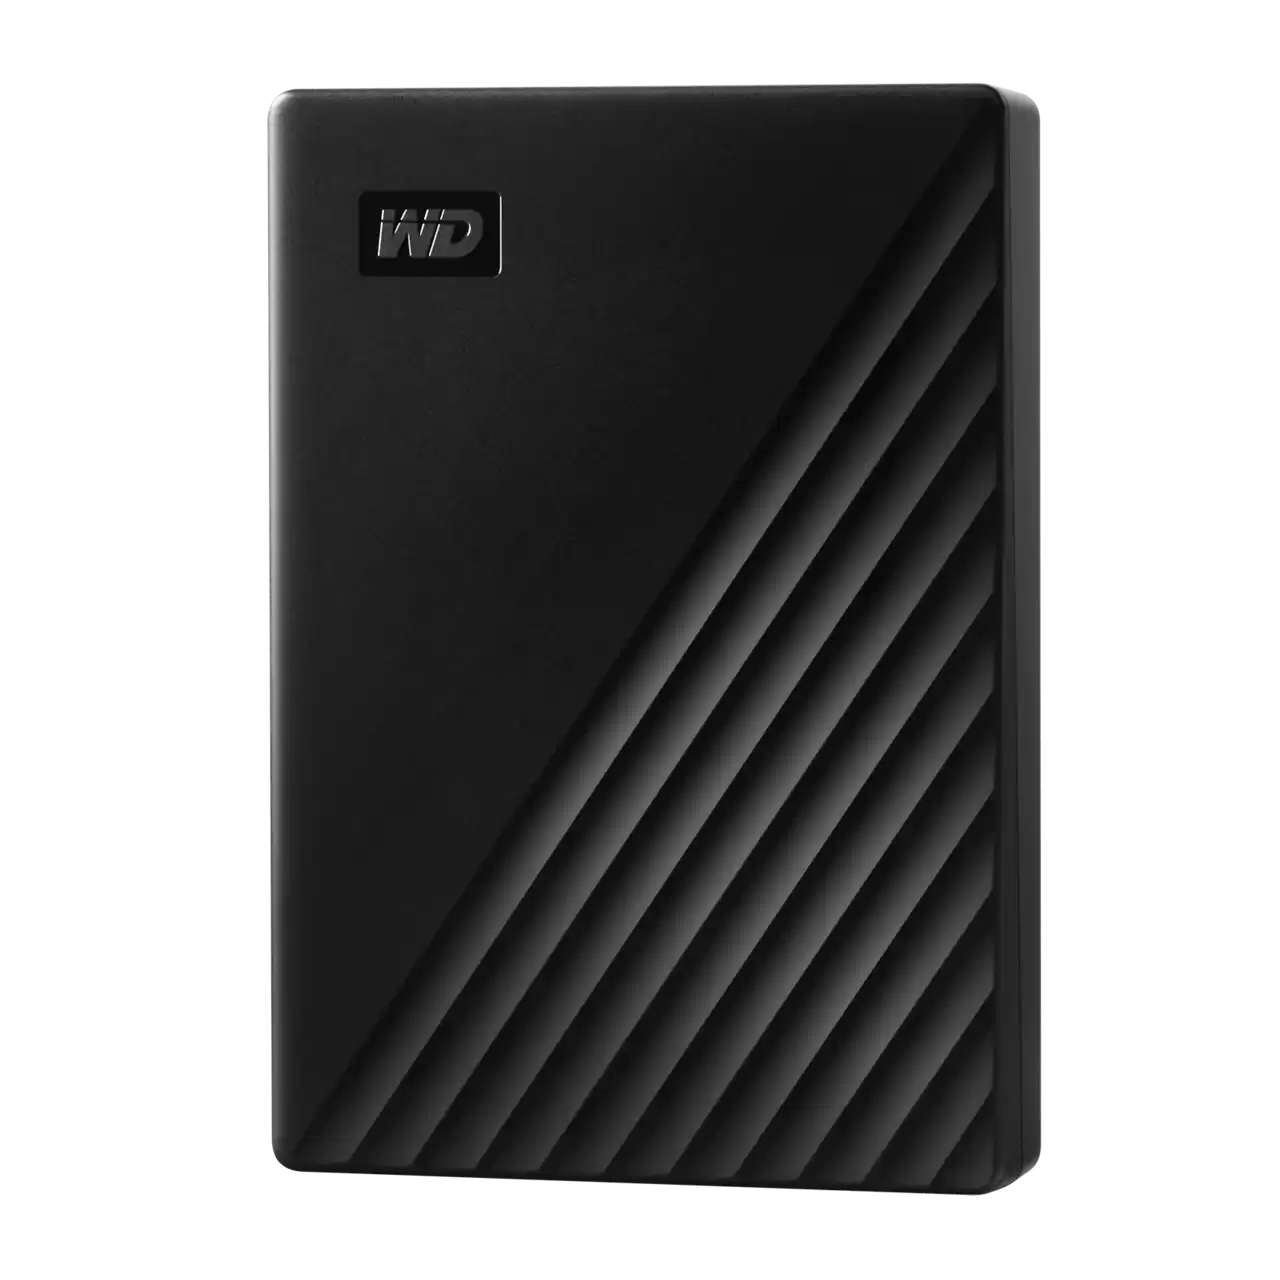 WD My Passport 5TB 2.5" External HDD - Black (WDBPKJ0050BBK)